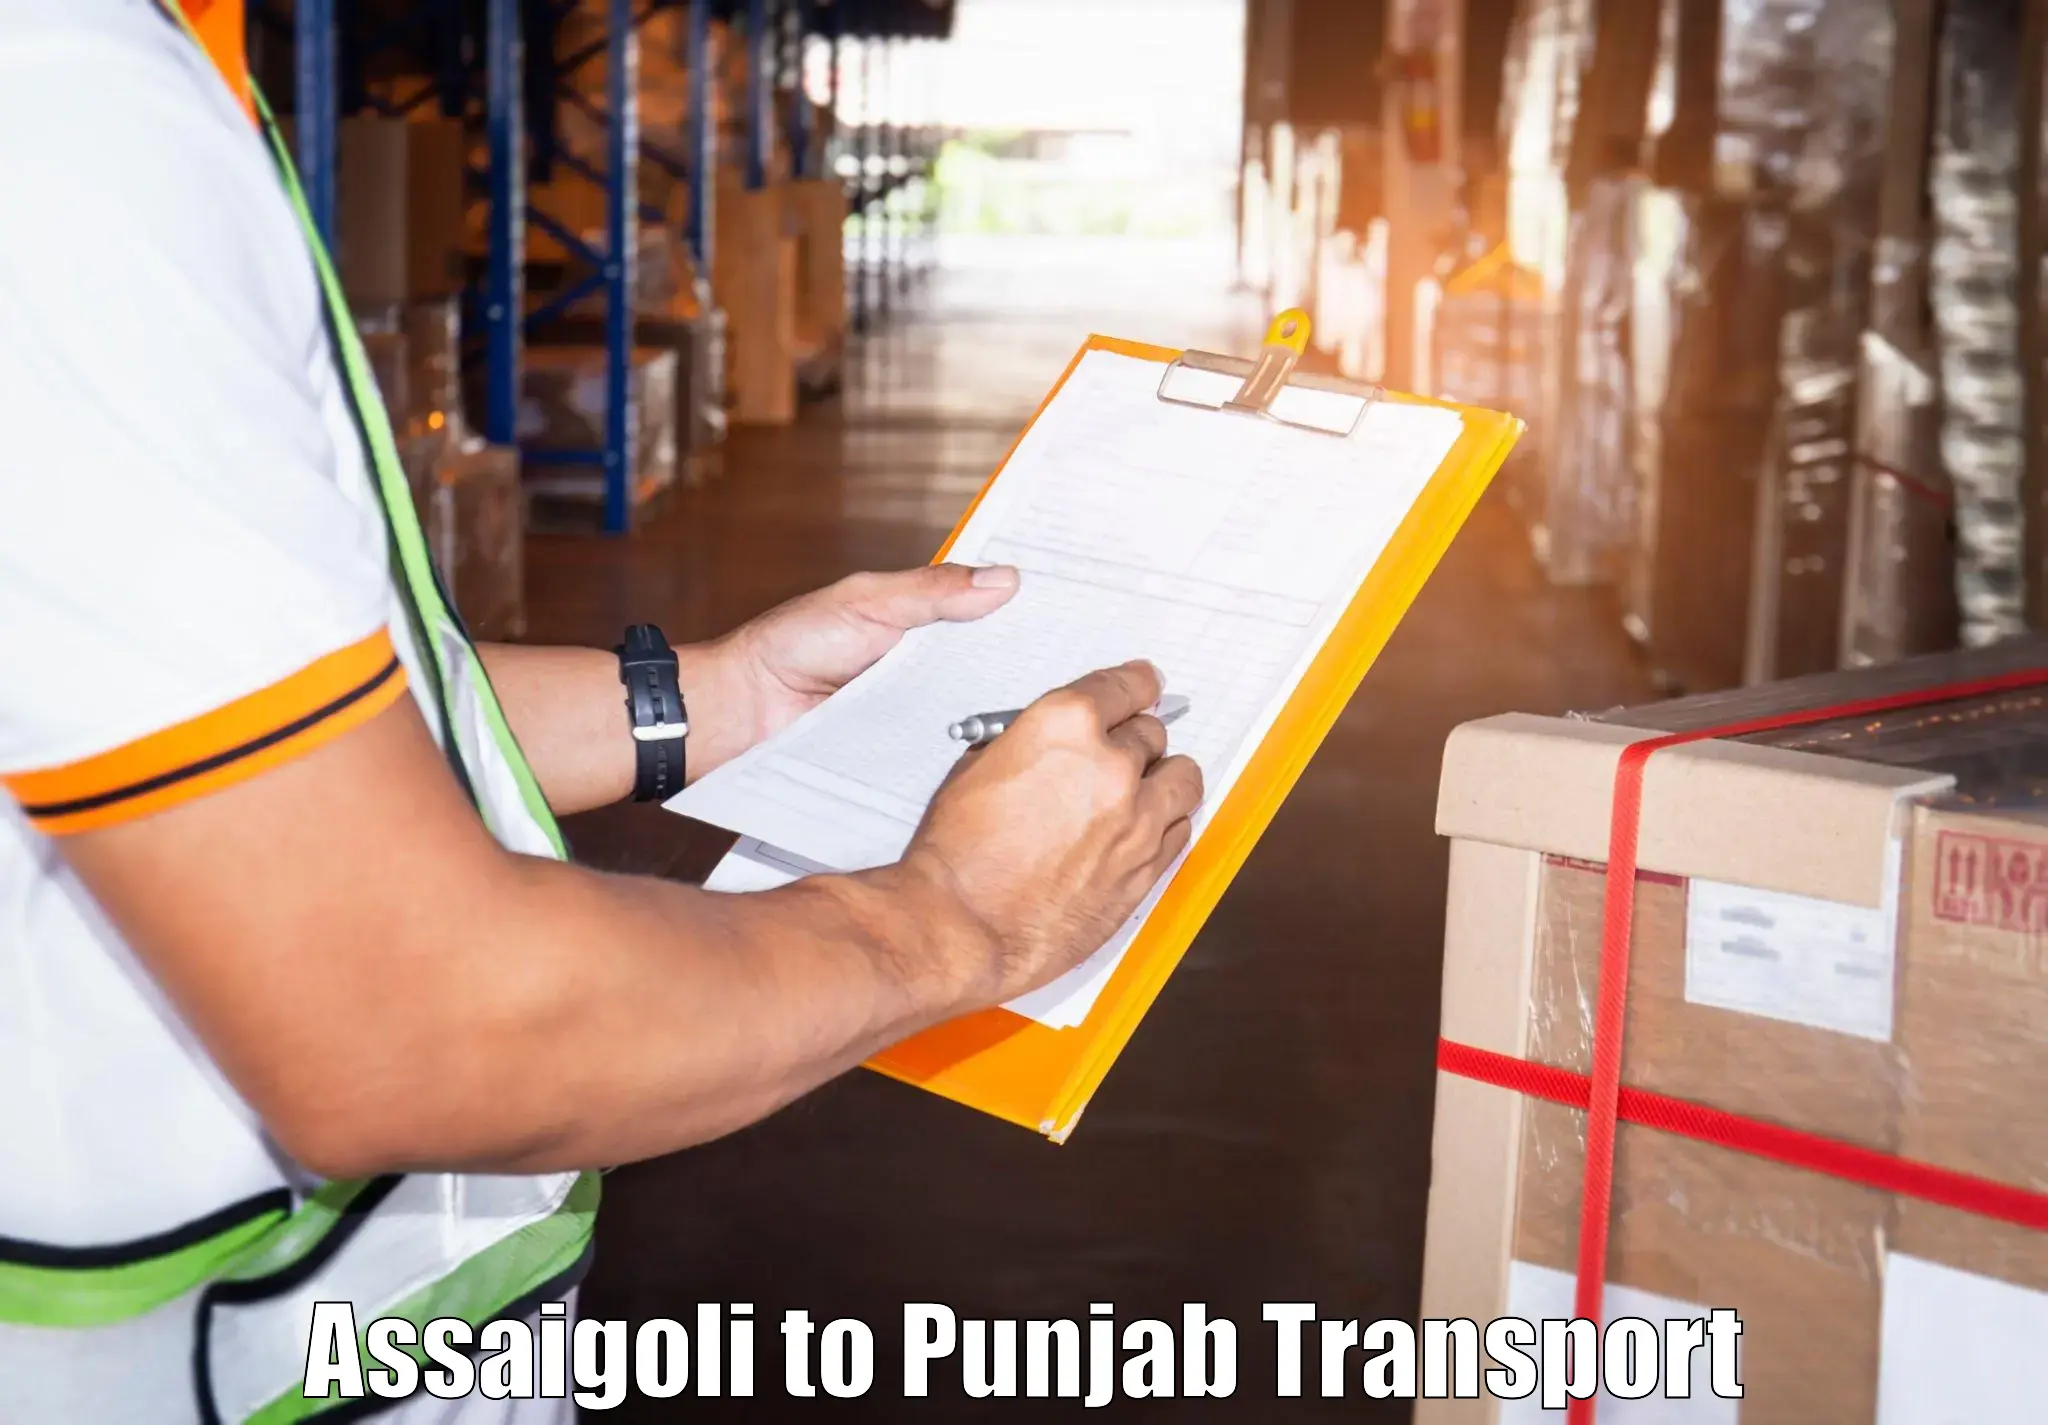 Express transport services Assaigoli to Punjab